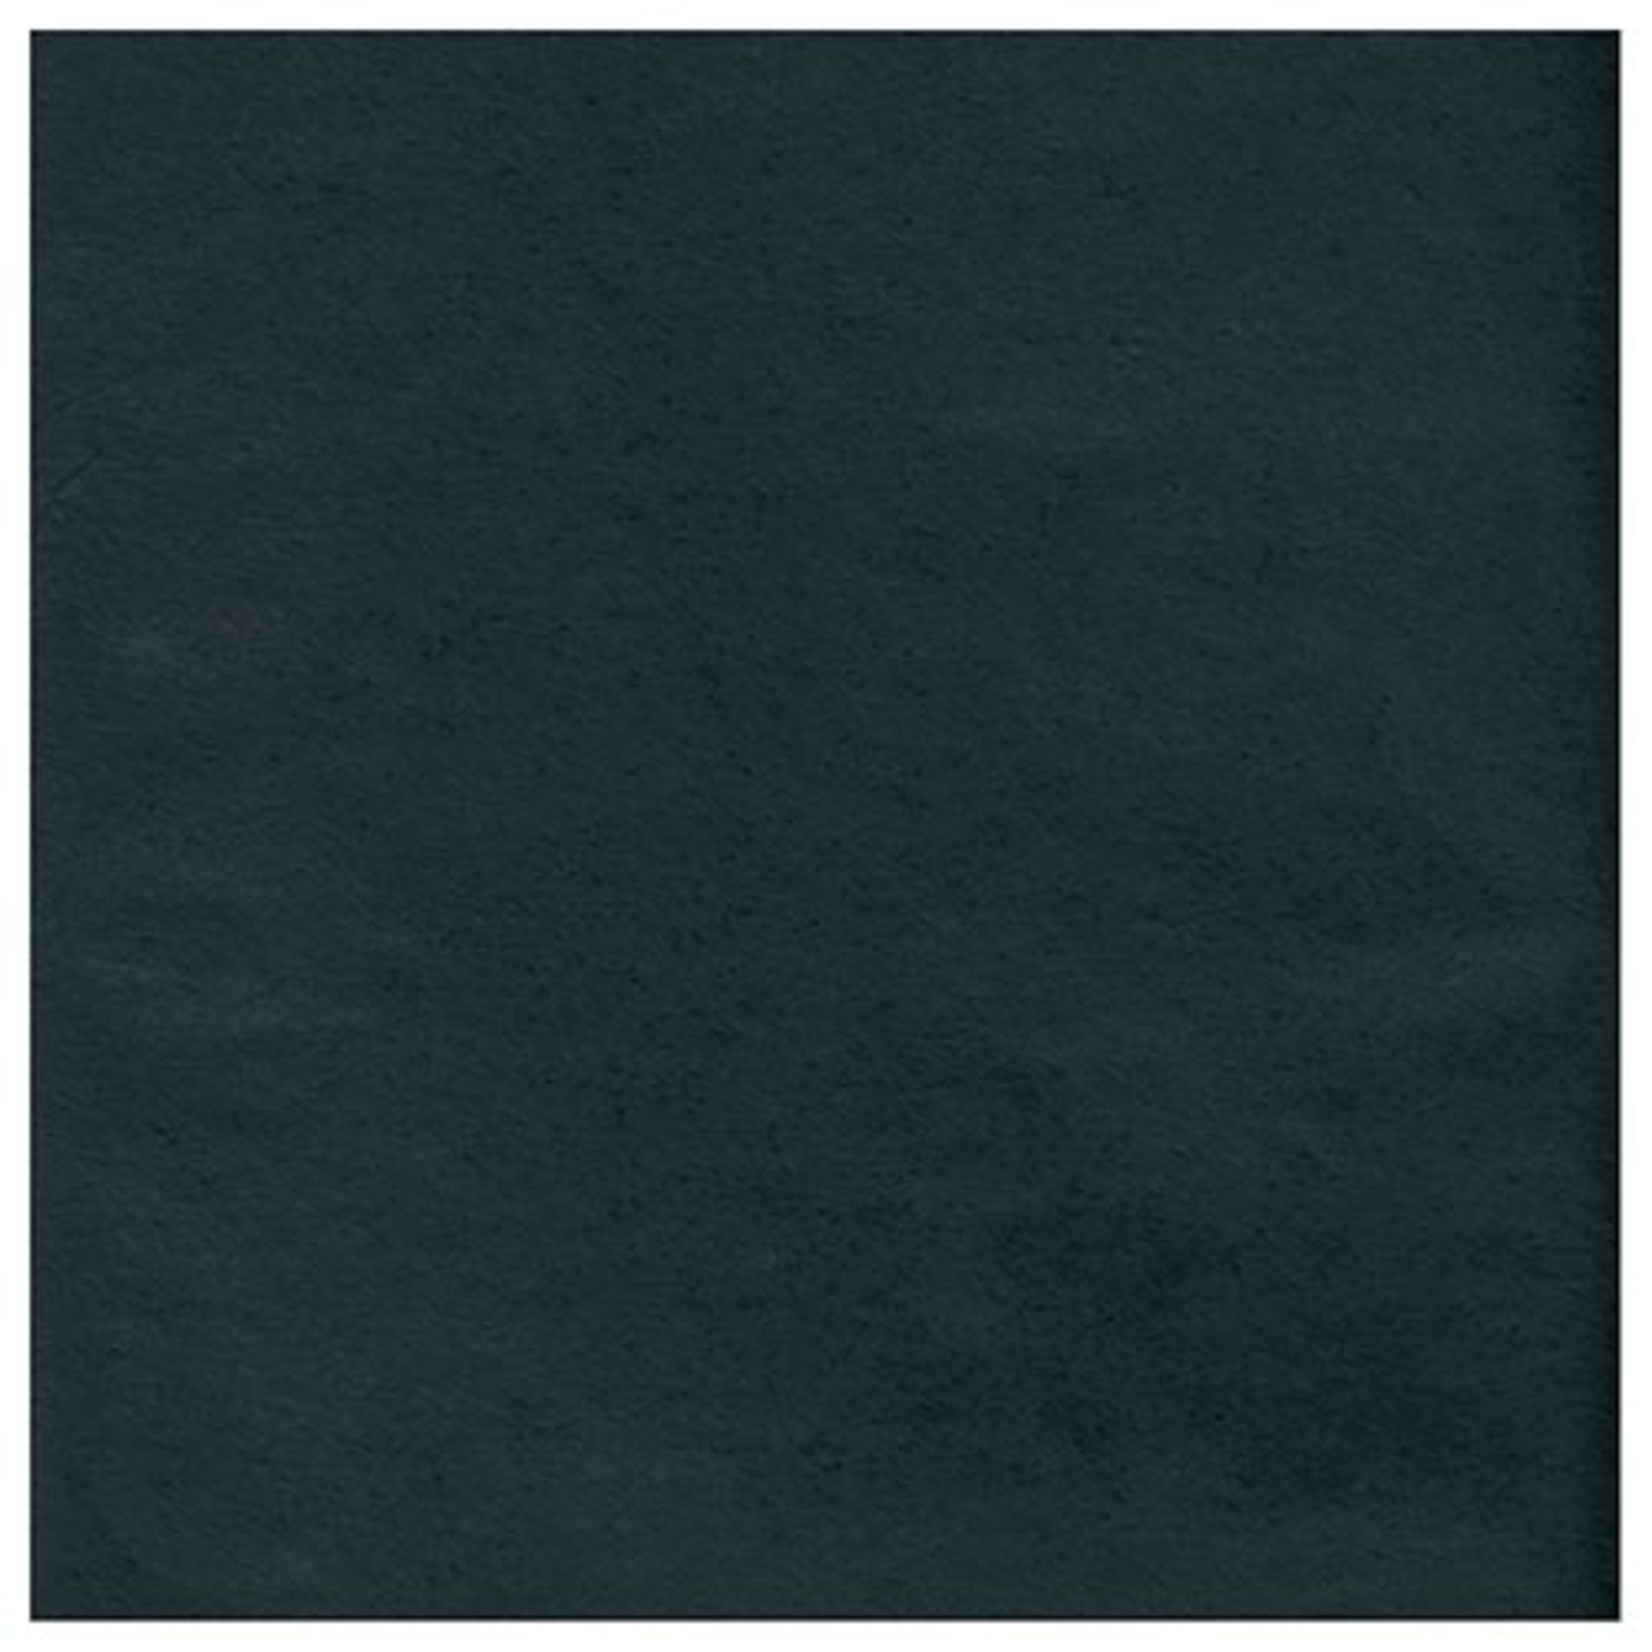 Amscan Black Tissue Paper - 8ct. (20" x 20")